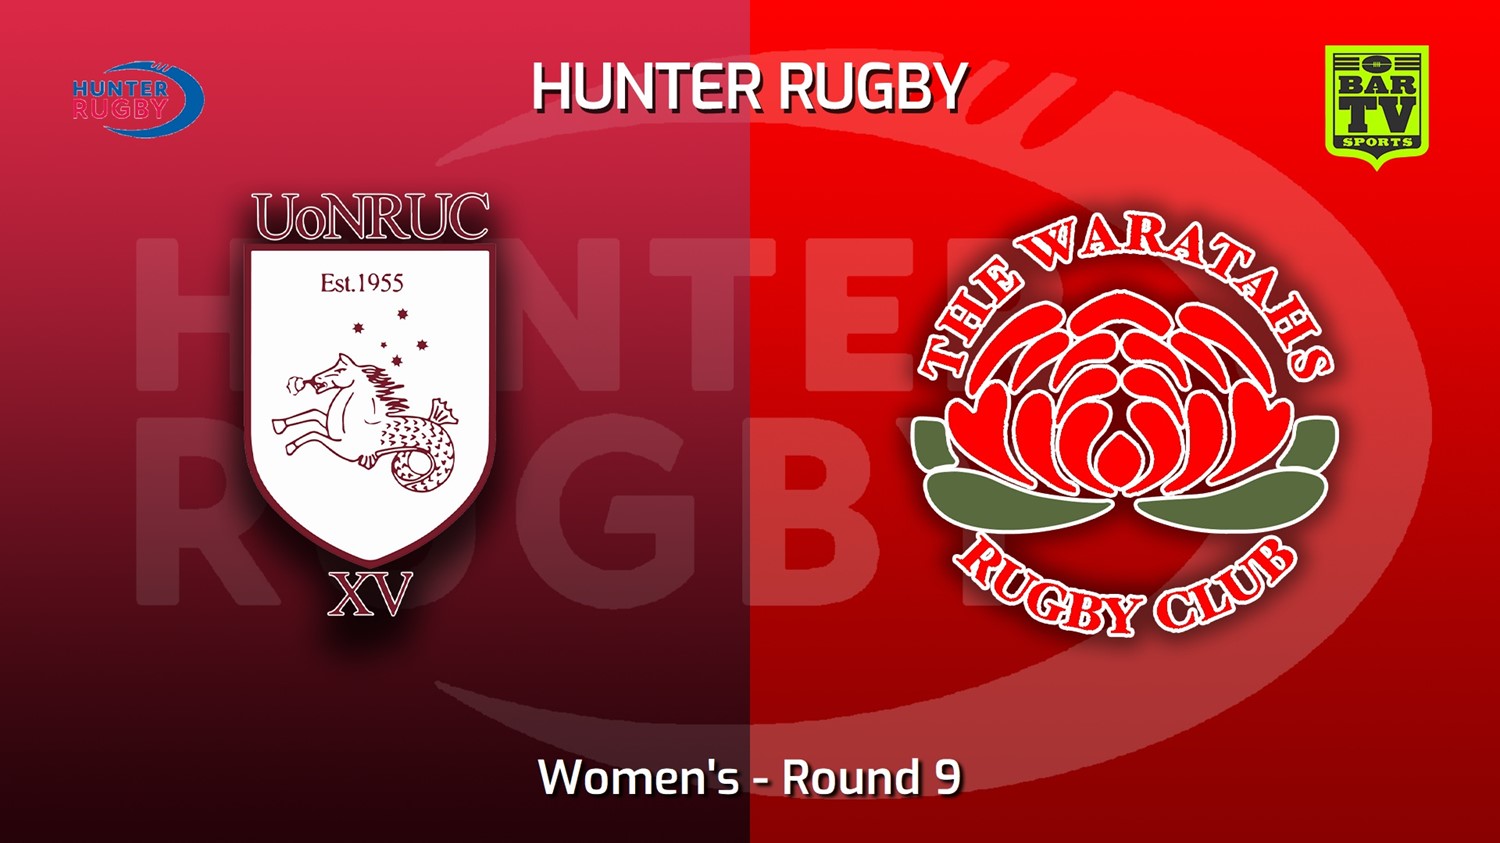 220625-Hunter Rugby Round 9 - Women's - University Of Newcastle v The Waratahs Slate Image